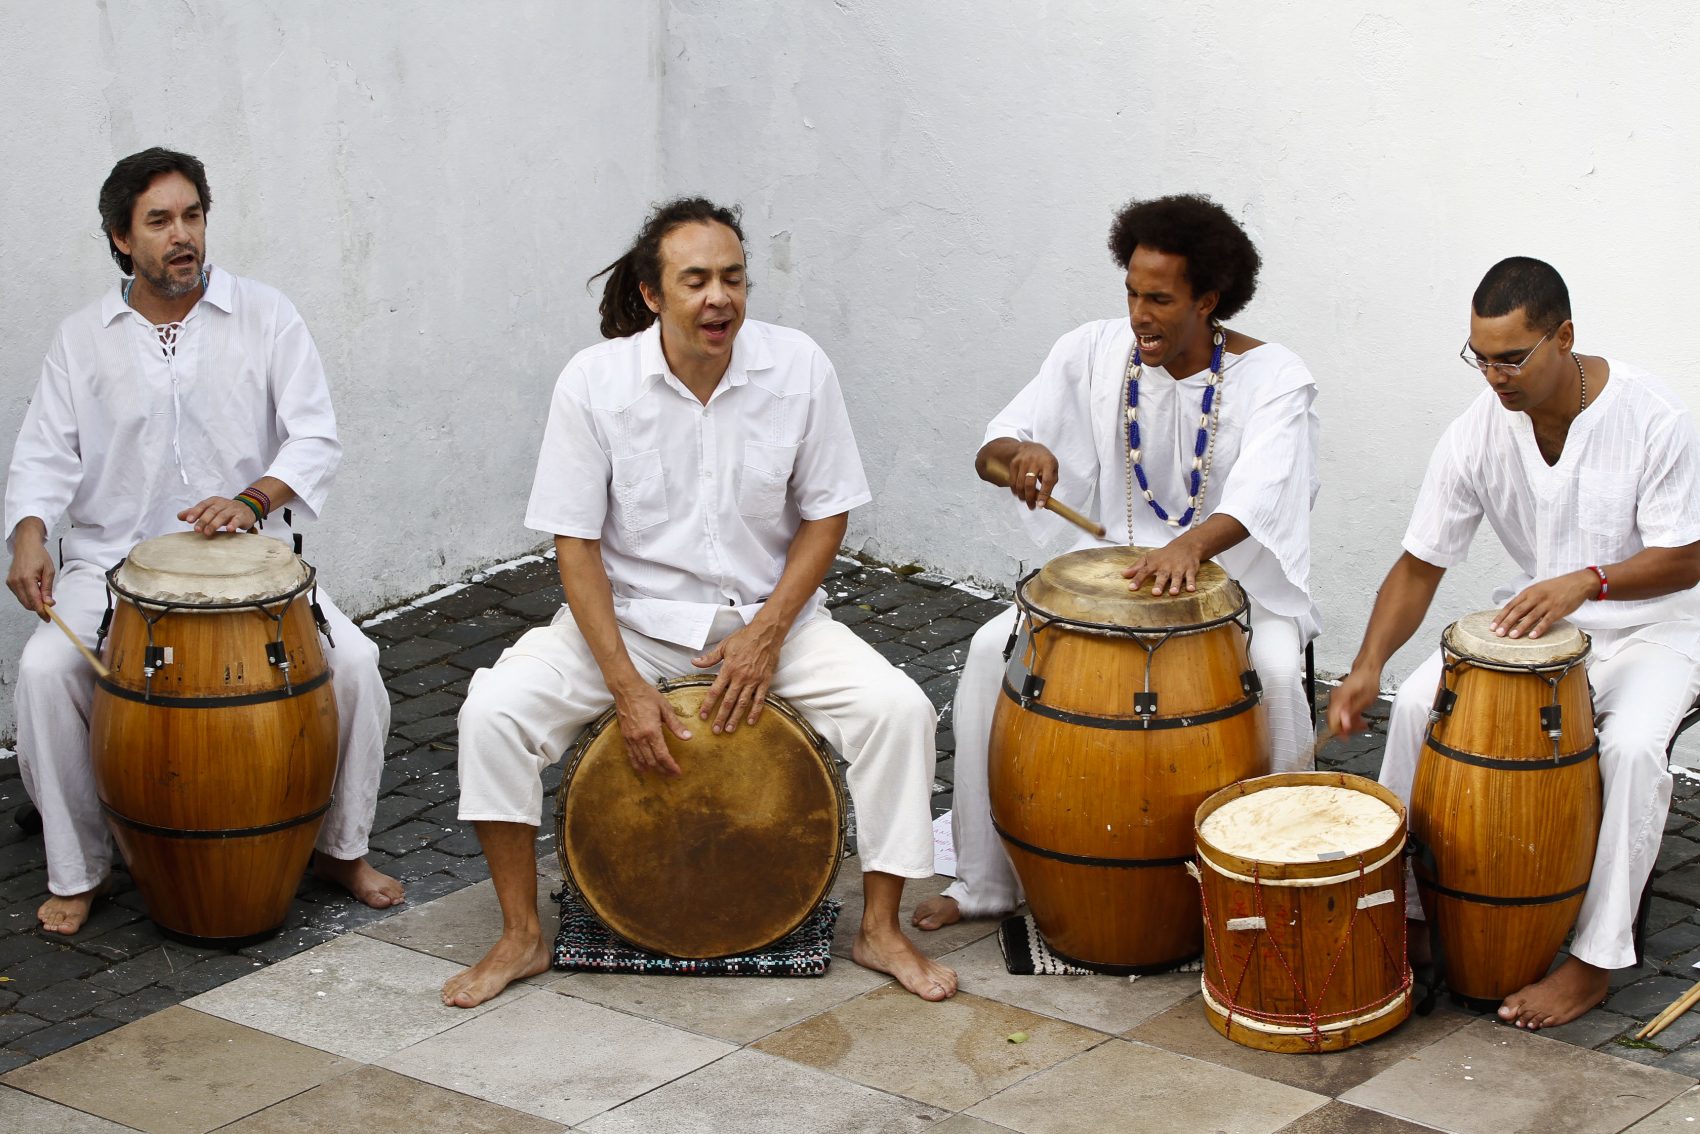 Grupo Alabê Ôni: Richard Serraria é o segundo, da esquerda para a direita, sentado sobre o tambor